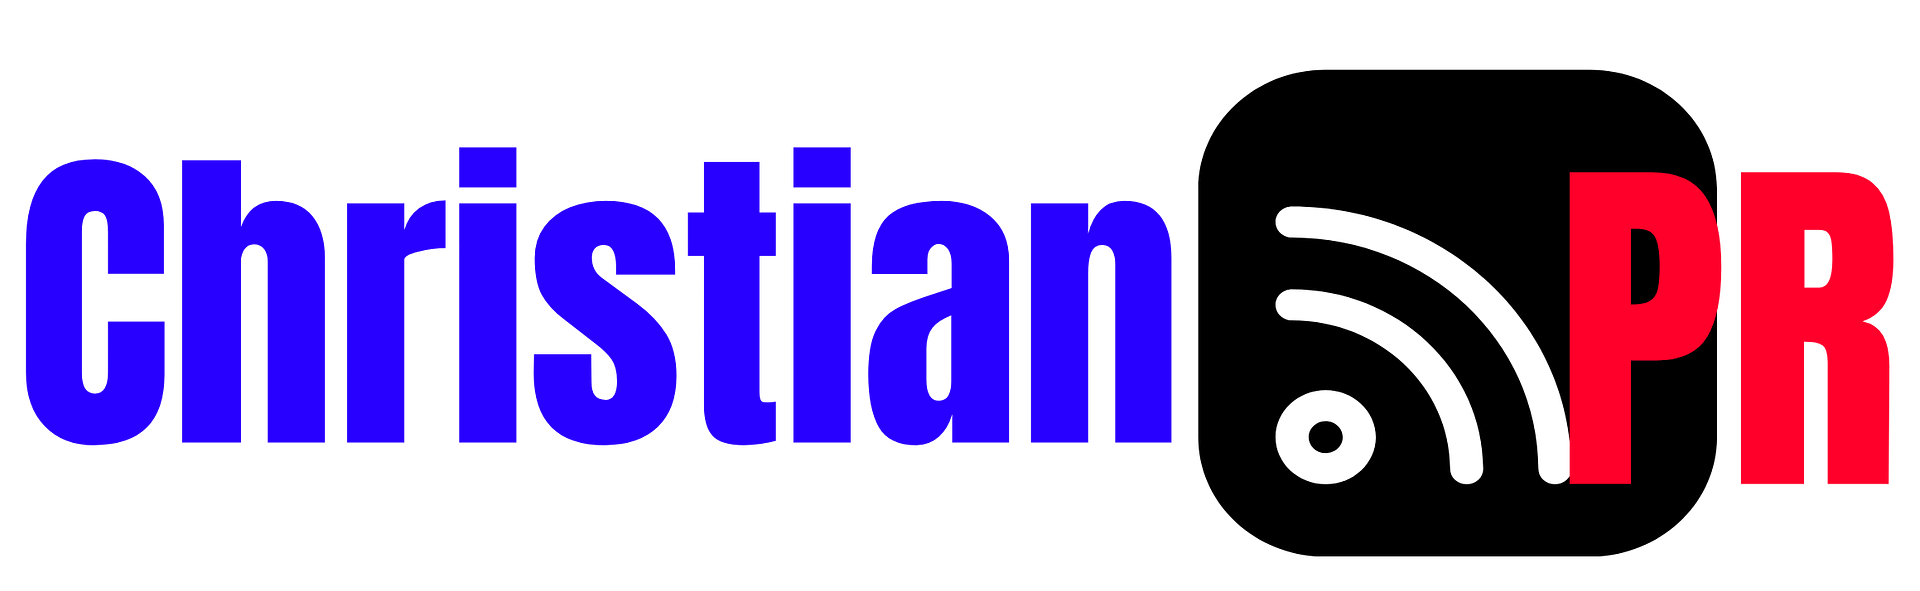 Christian-PR